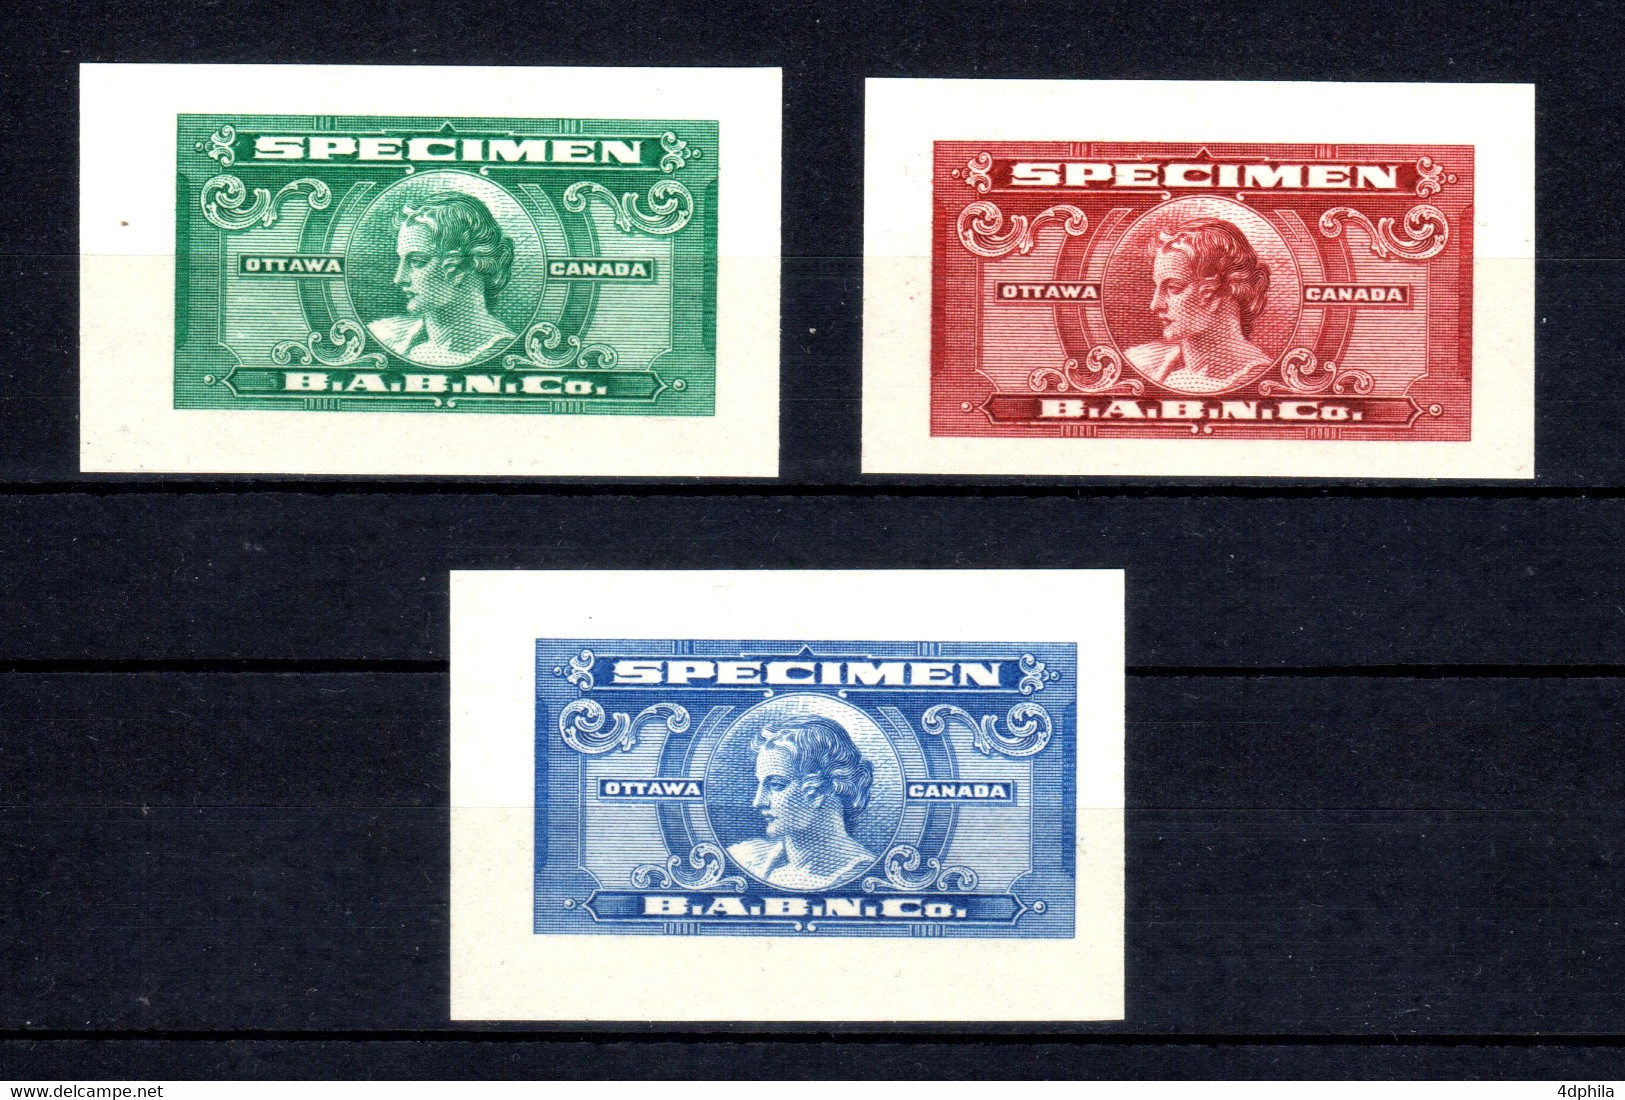 CANADA - 1935 - RARE 3 Dummy Stamps B.A.B.N.Co. - Specimen Essay Proof Trial Prueba Probedruck Test - Errors, Freaks & Oddities (EFO)